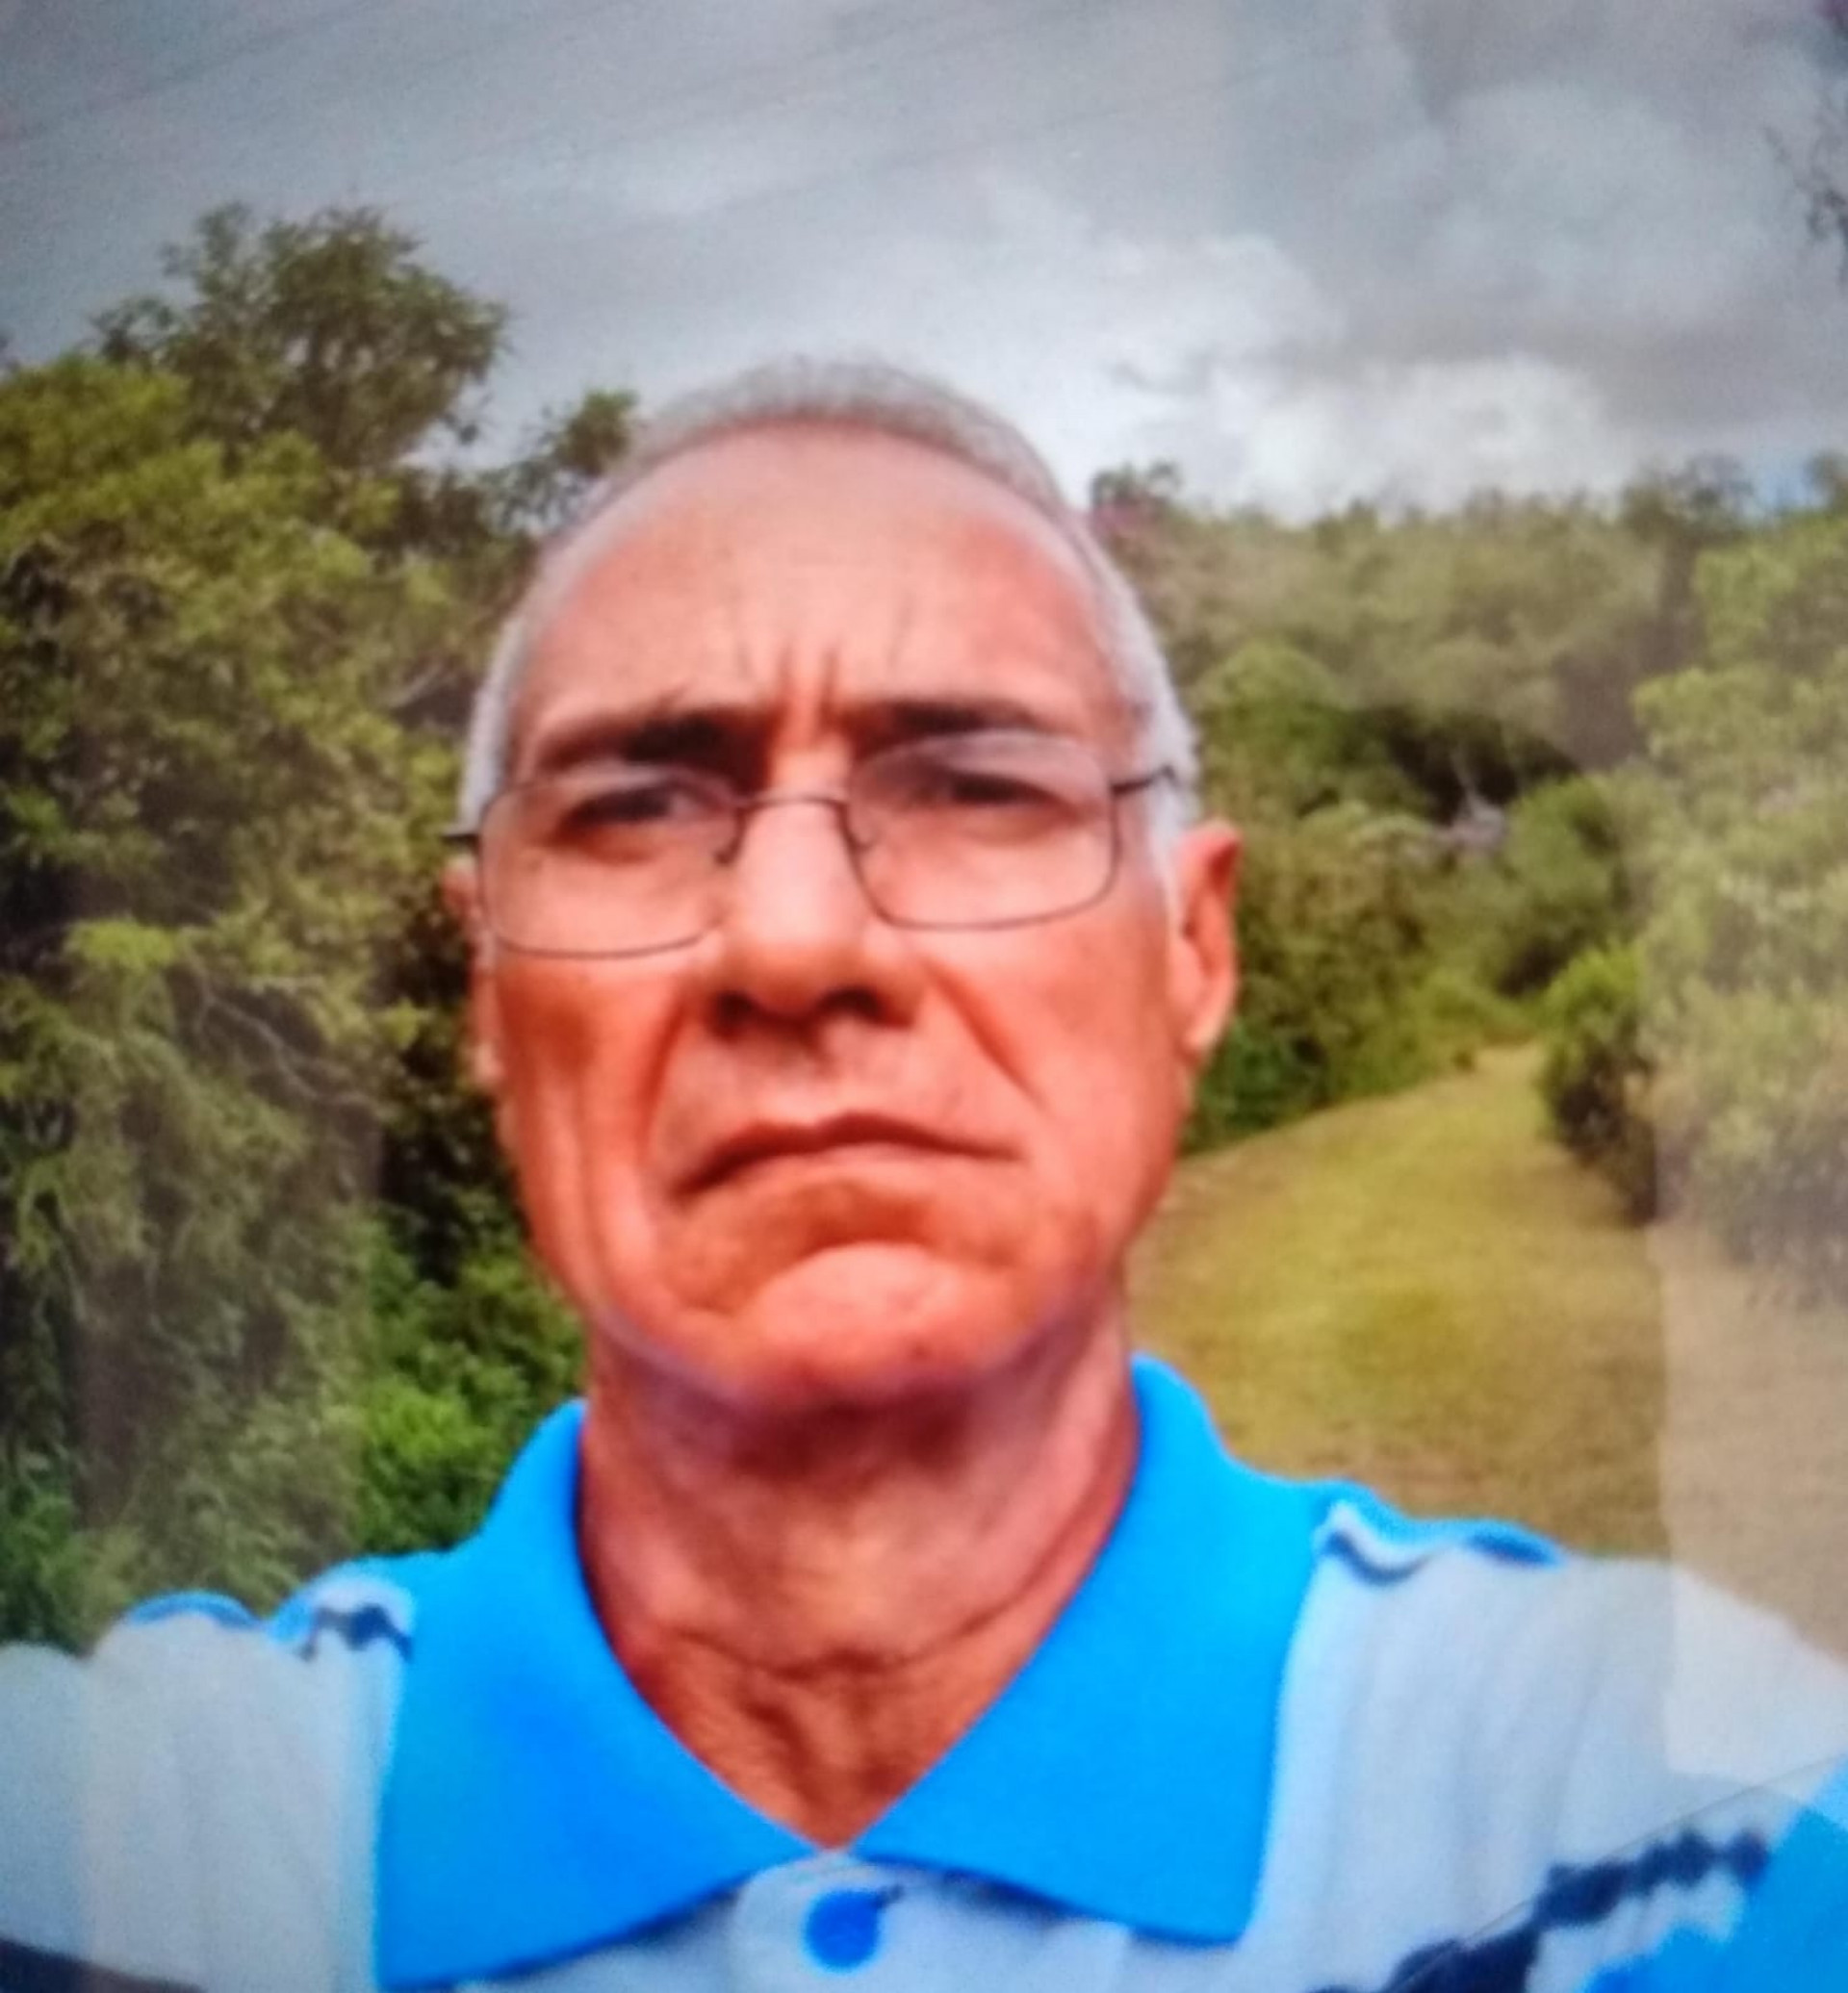 José Cláudio has been missing since April 18